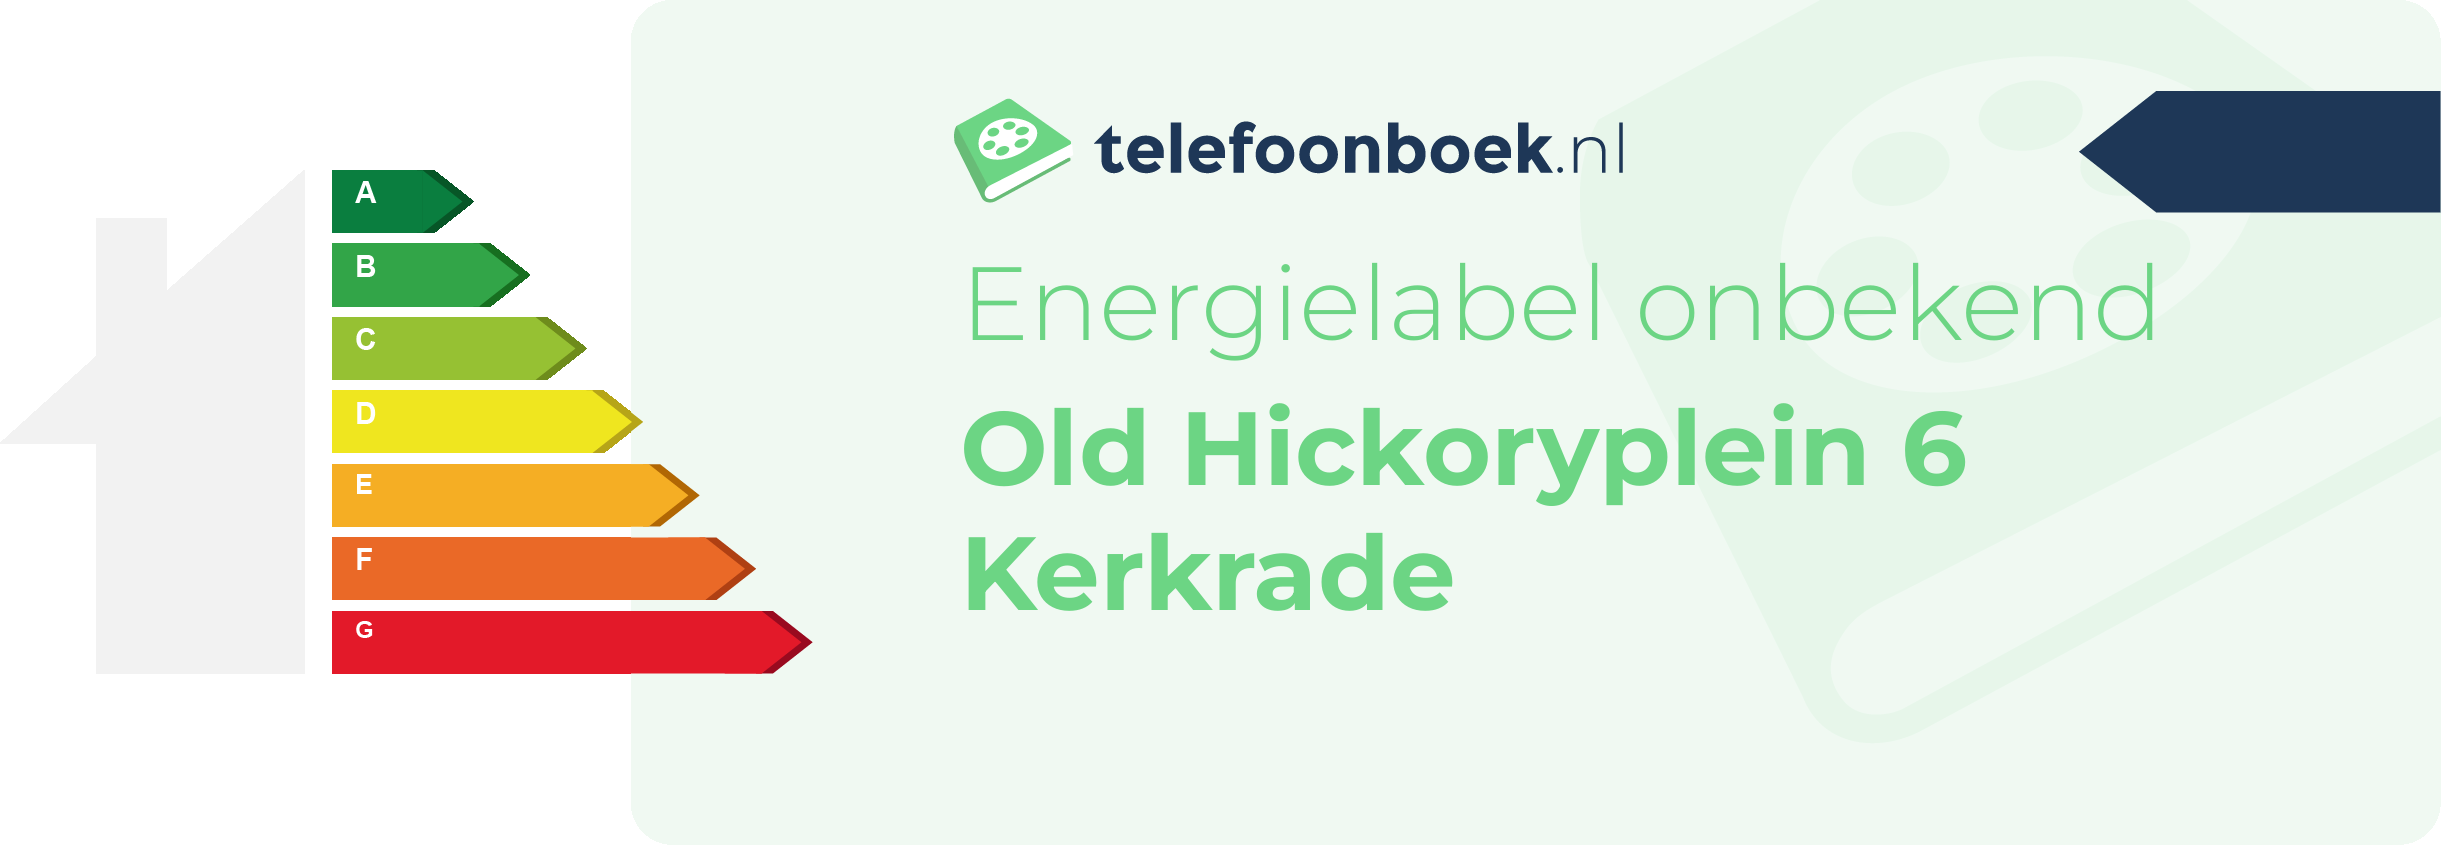 Energielabel Old Hickoryplein 6 Kerkrade